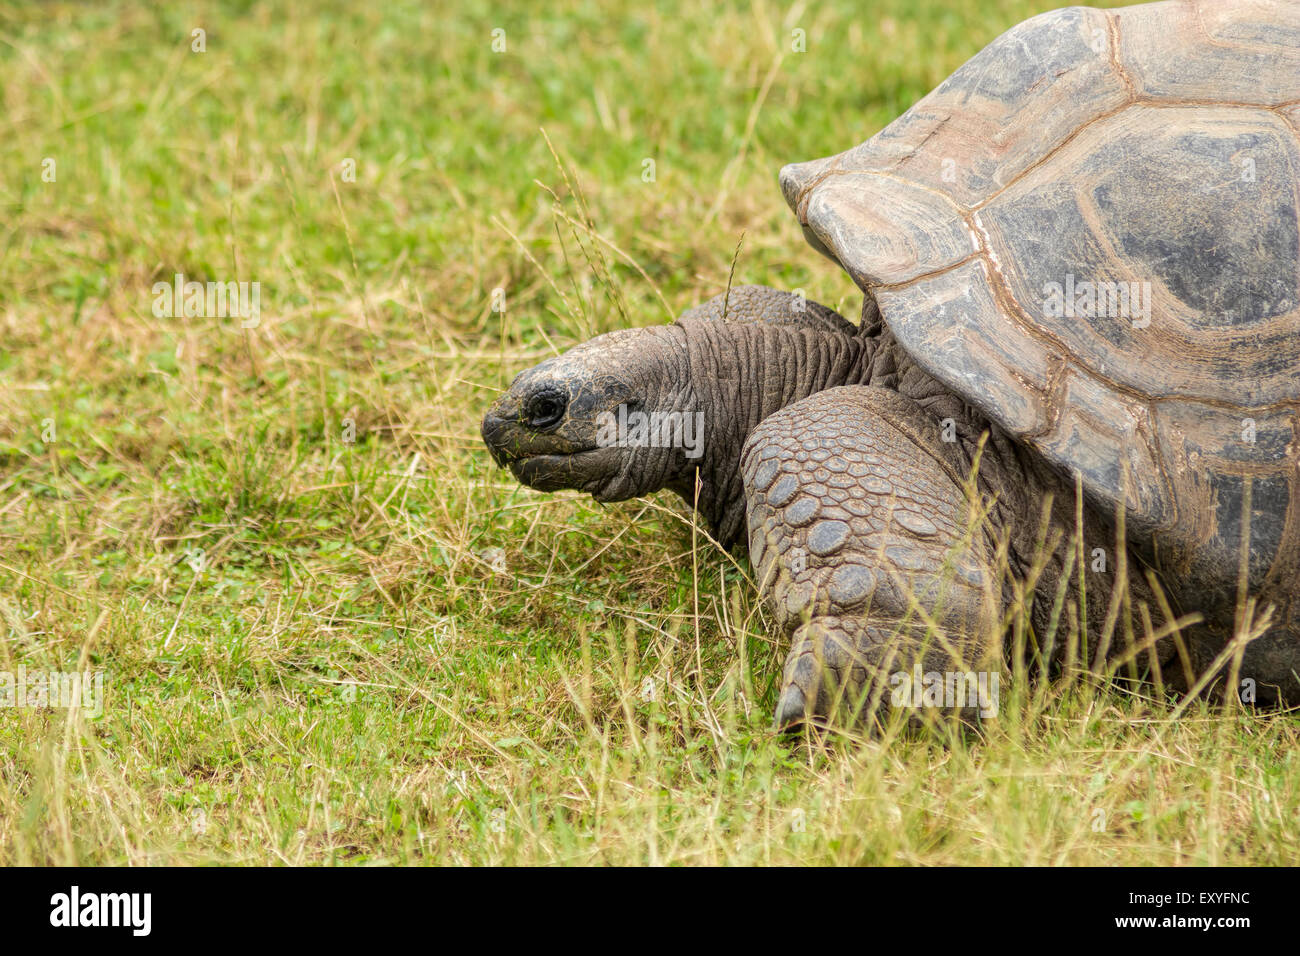 Turtoise, Dipsochelys Gigantean, beautiful long-lived endangered animal. Stock Photo